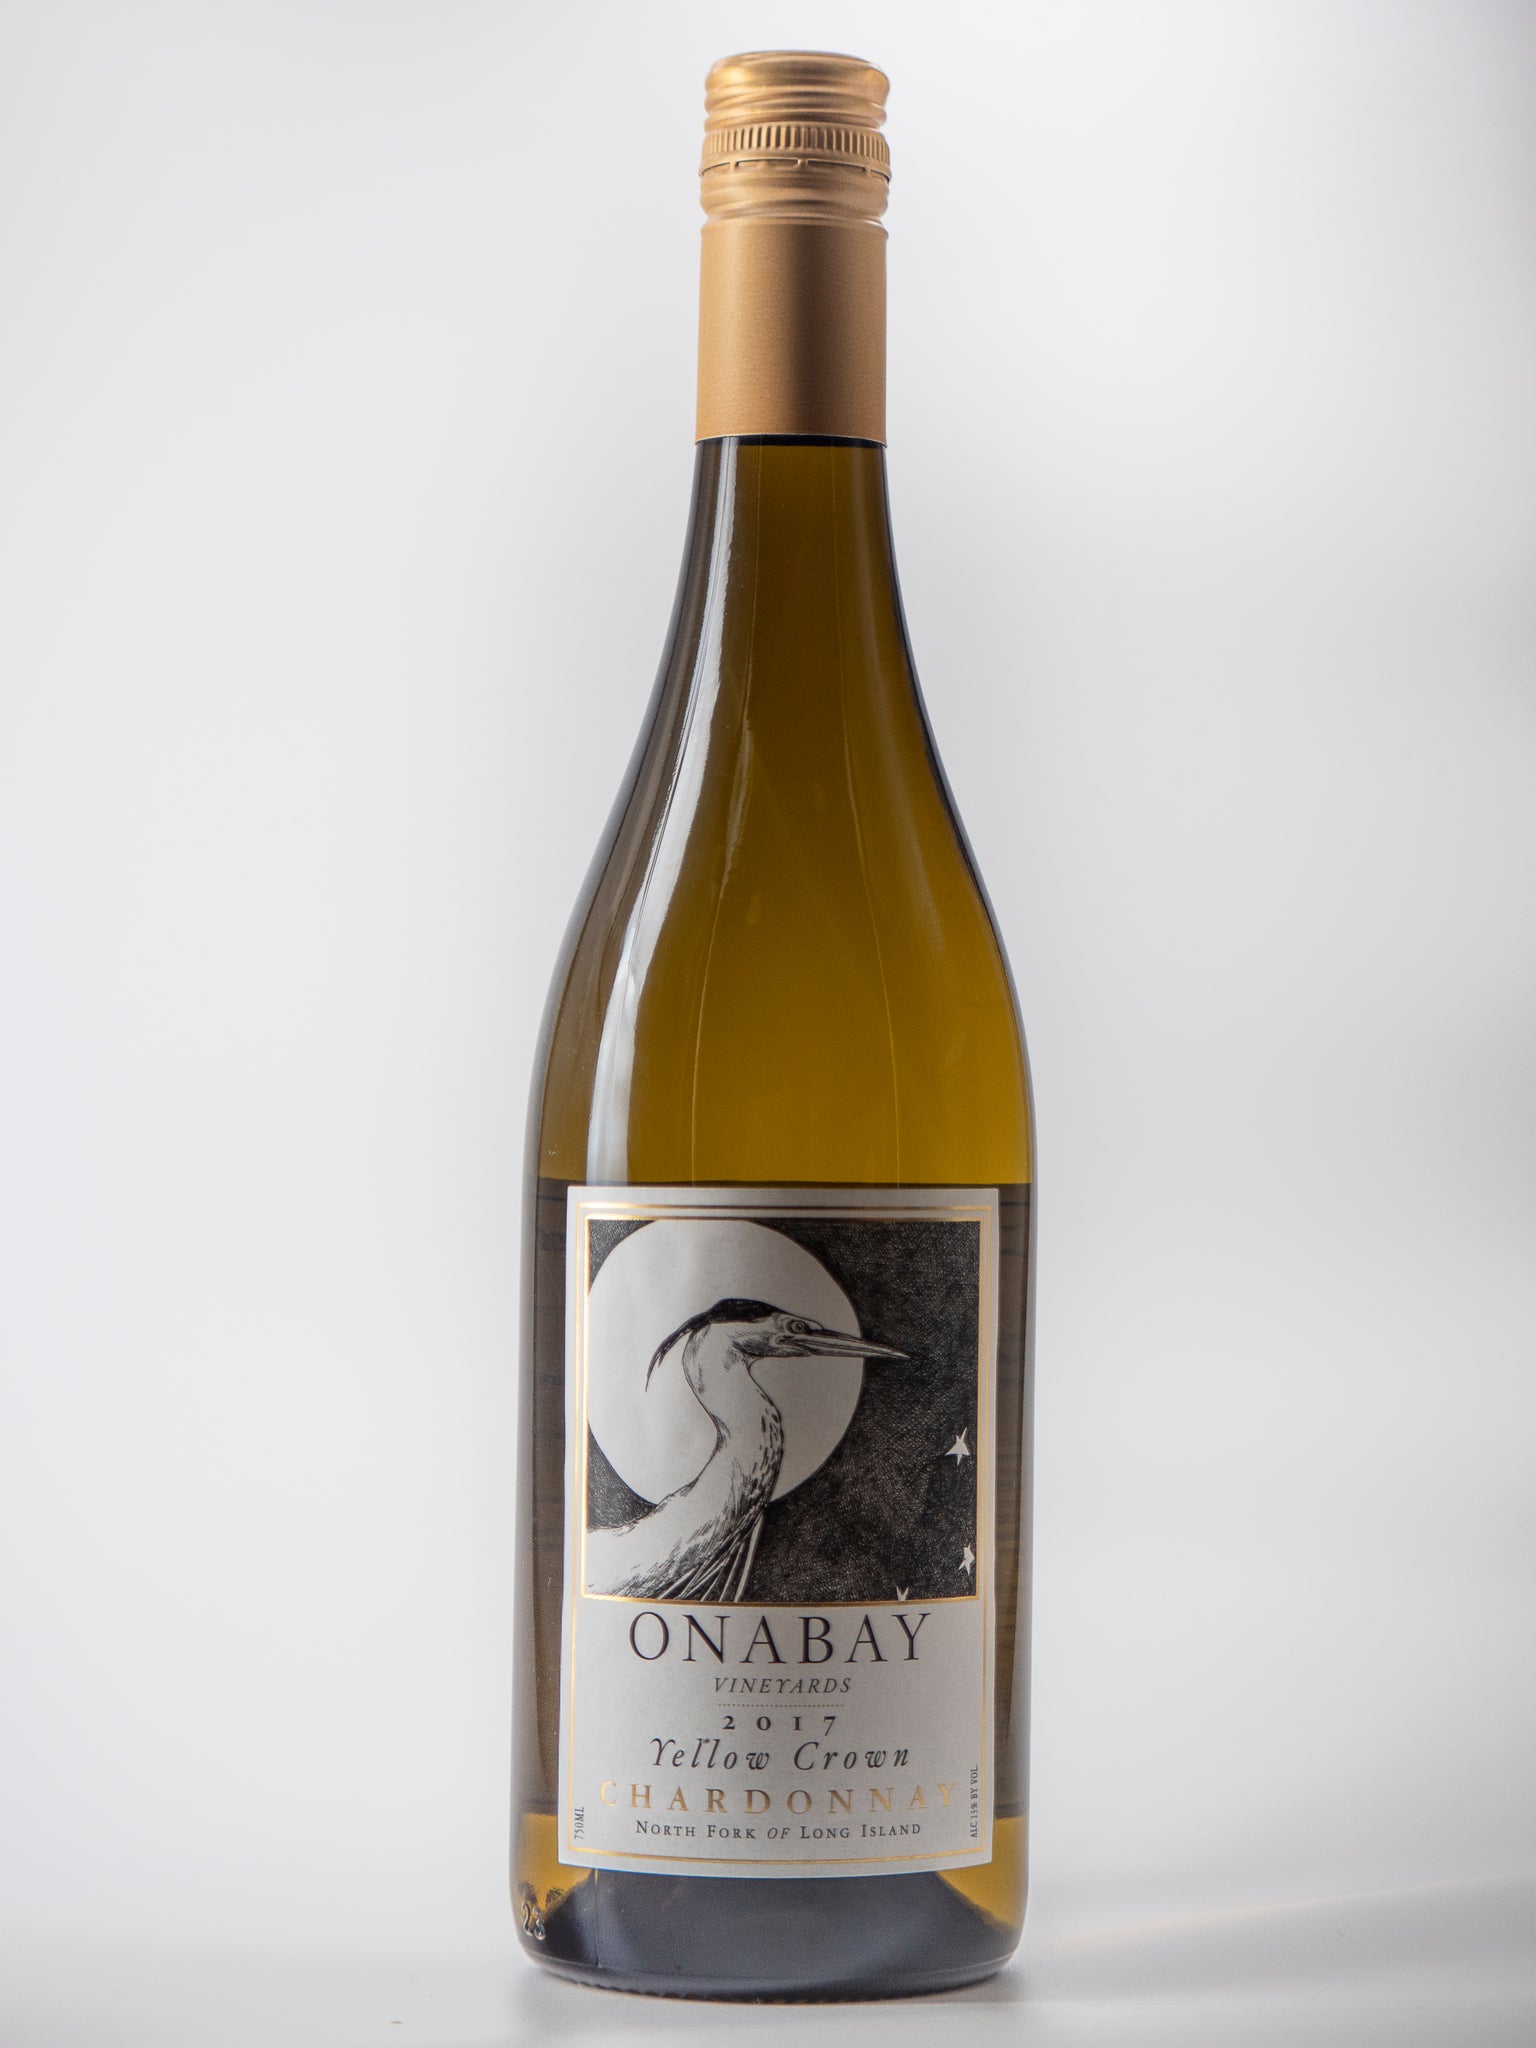 Chardonnay, Onabay Yellow Crown